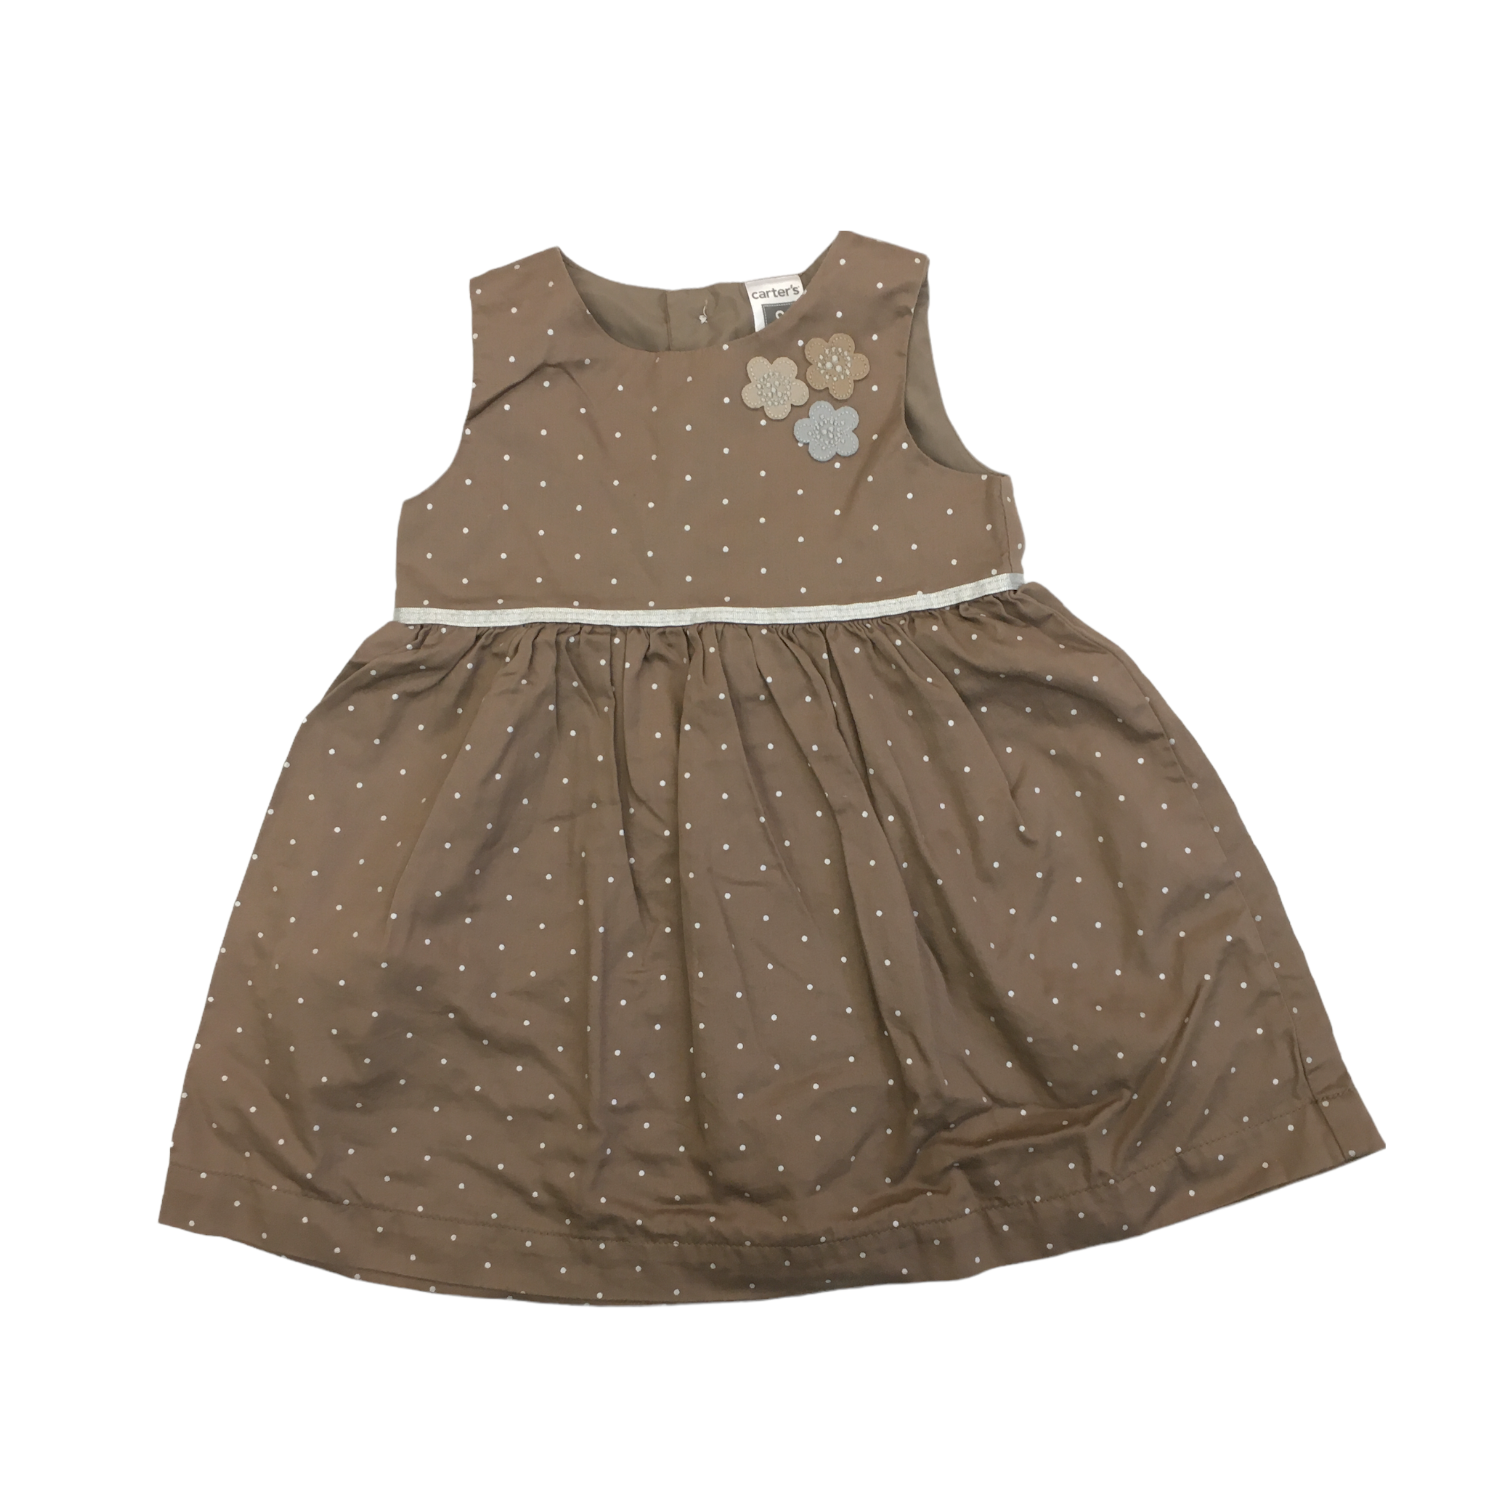 Sandee Rain Boutique - LuLaRoe Disney Carly Dress LuLaRoe Dresses